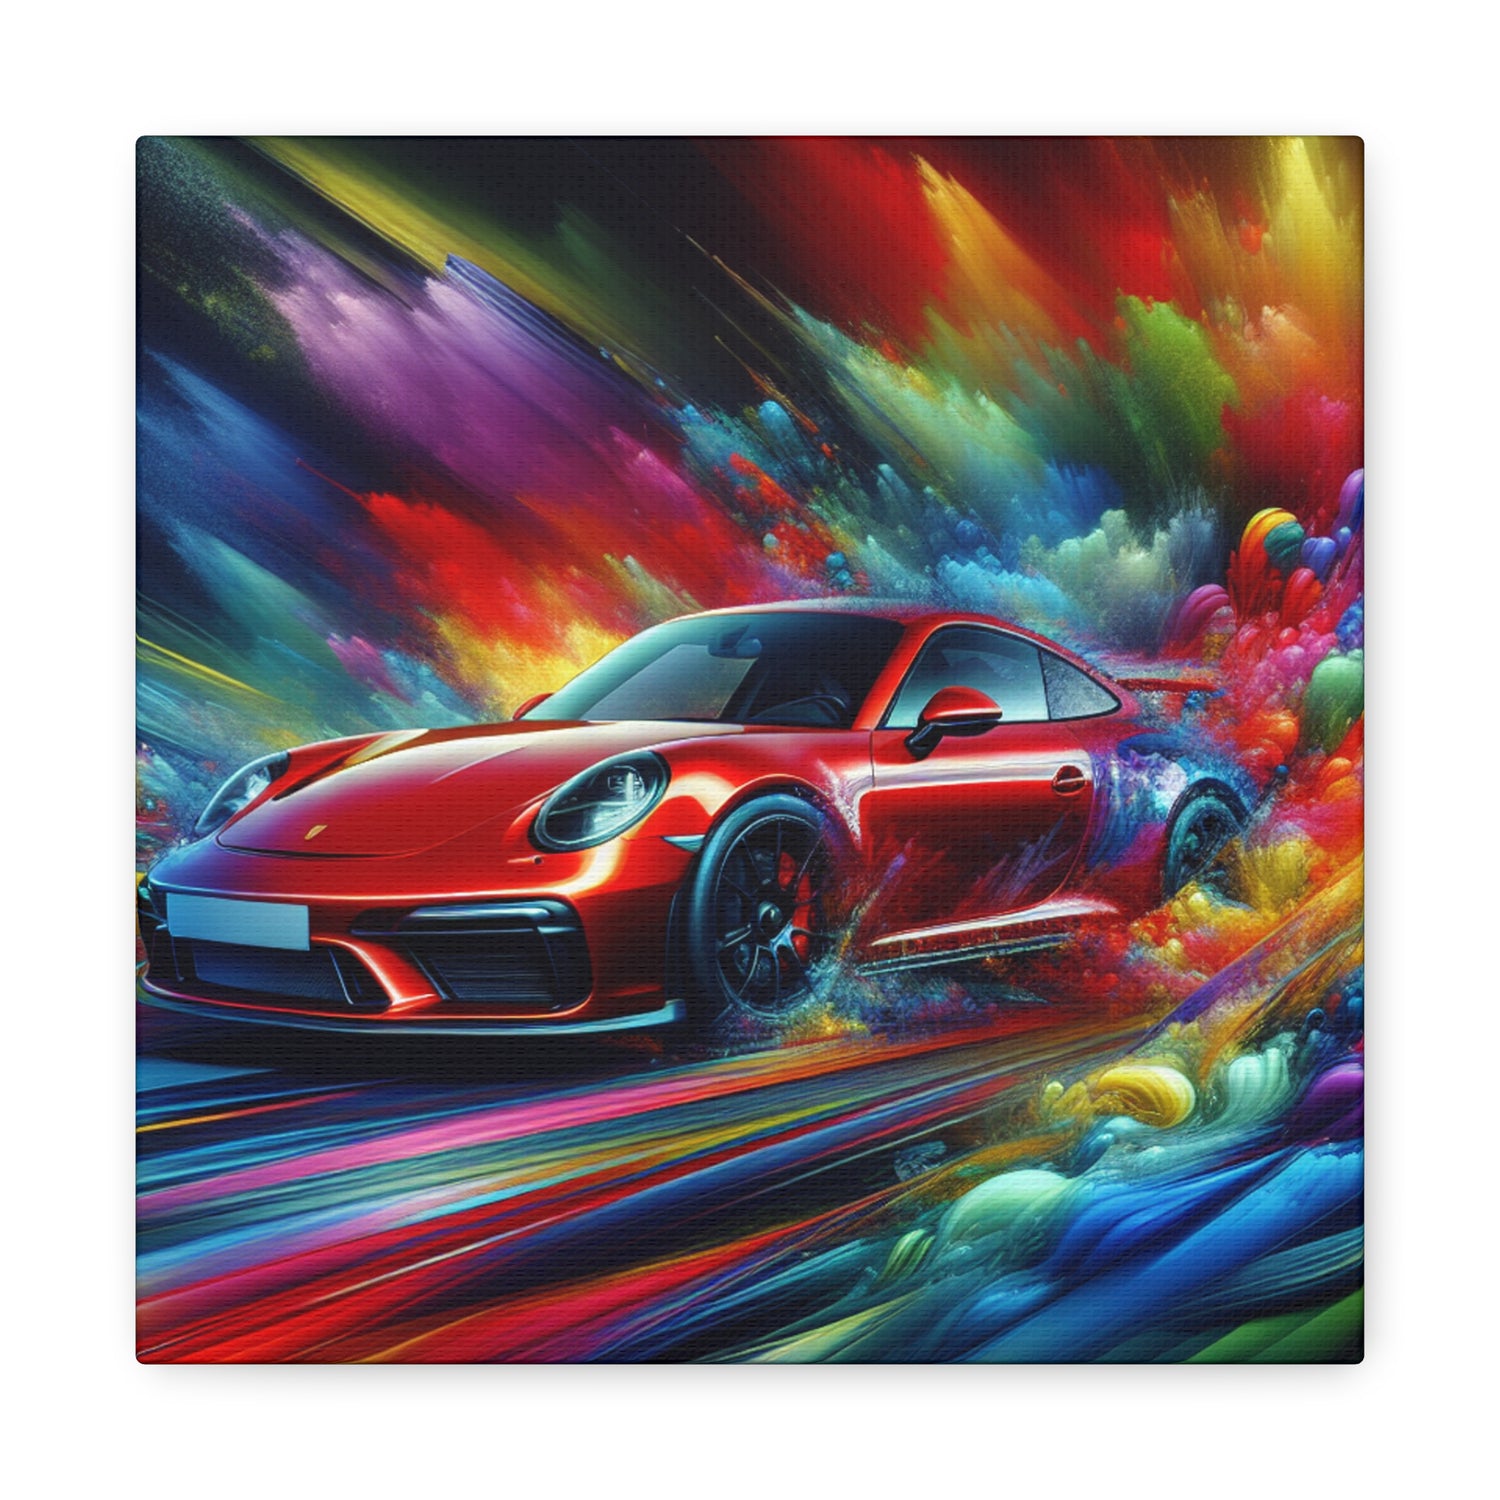 Porsche 911 Wall Art Canva - Luxury Car Painting, Automotive Home Decor, Framed Car enthusiast gift